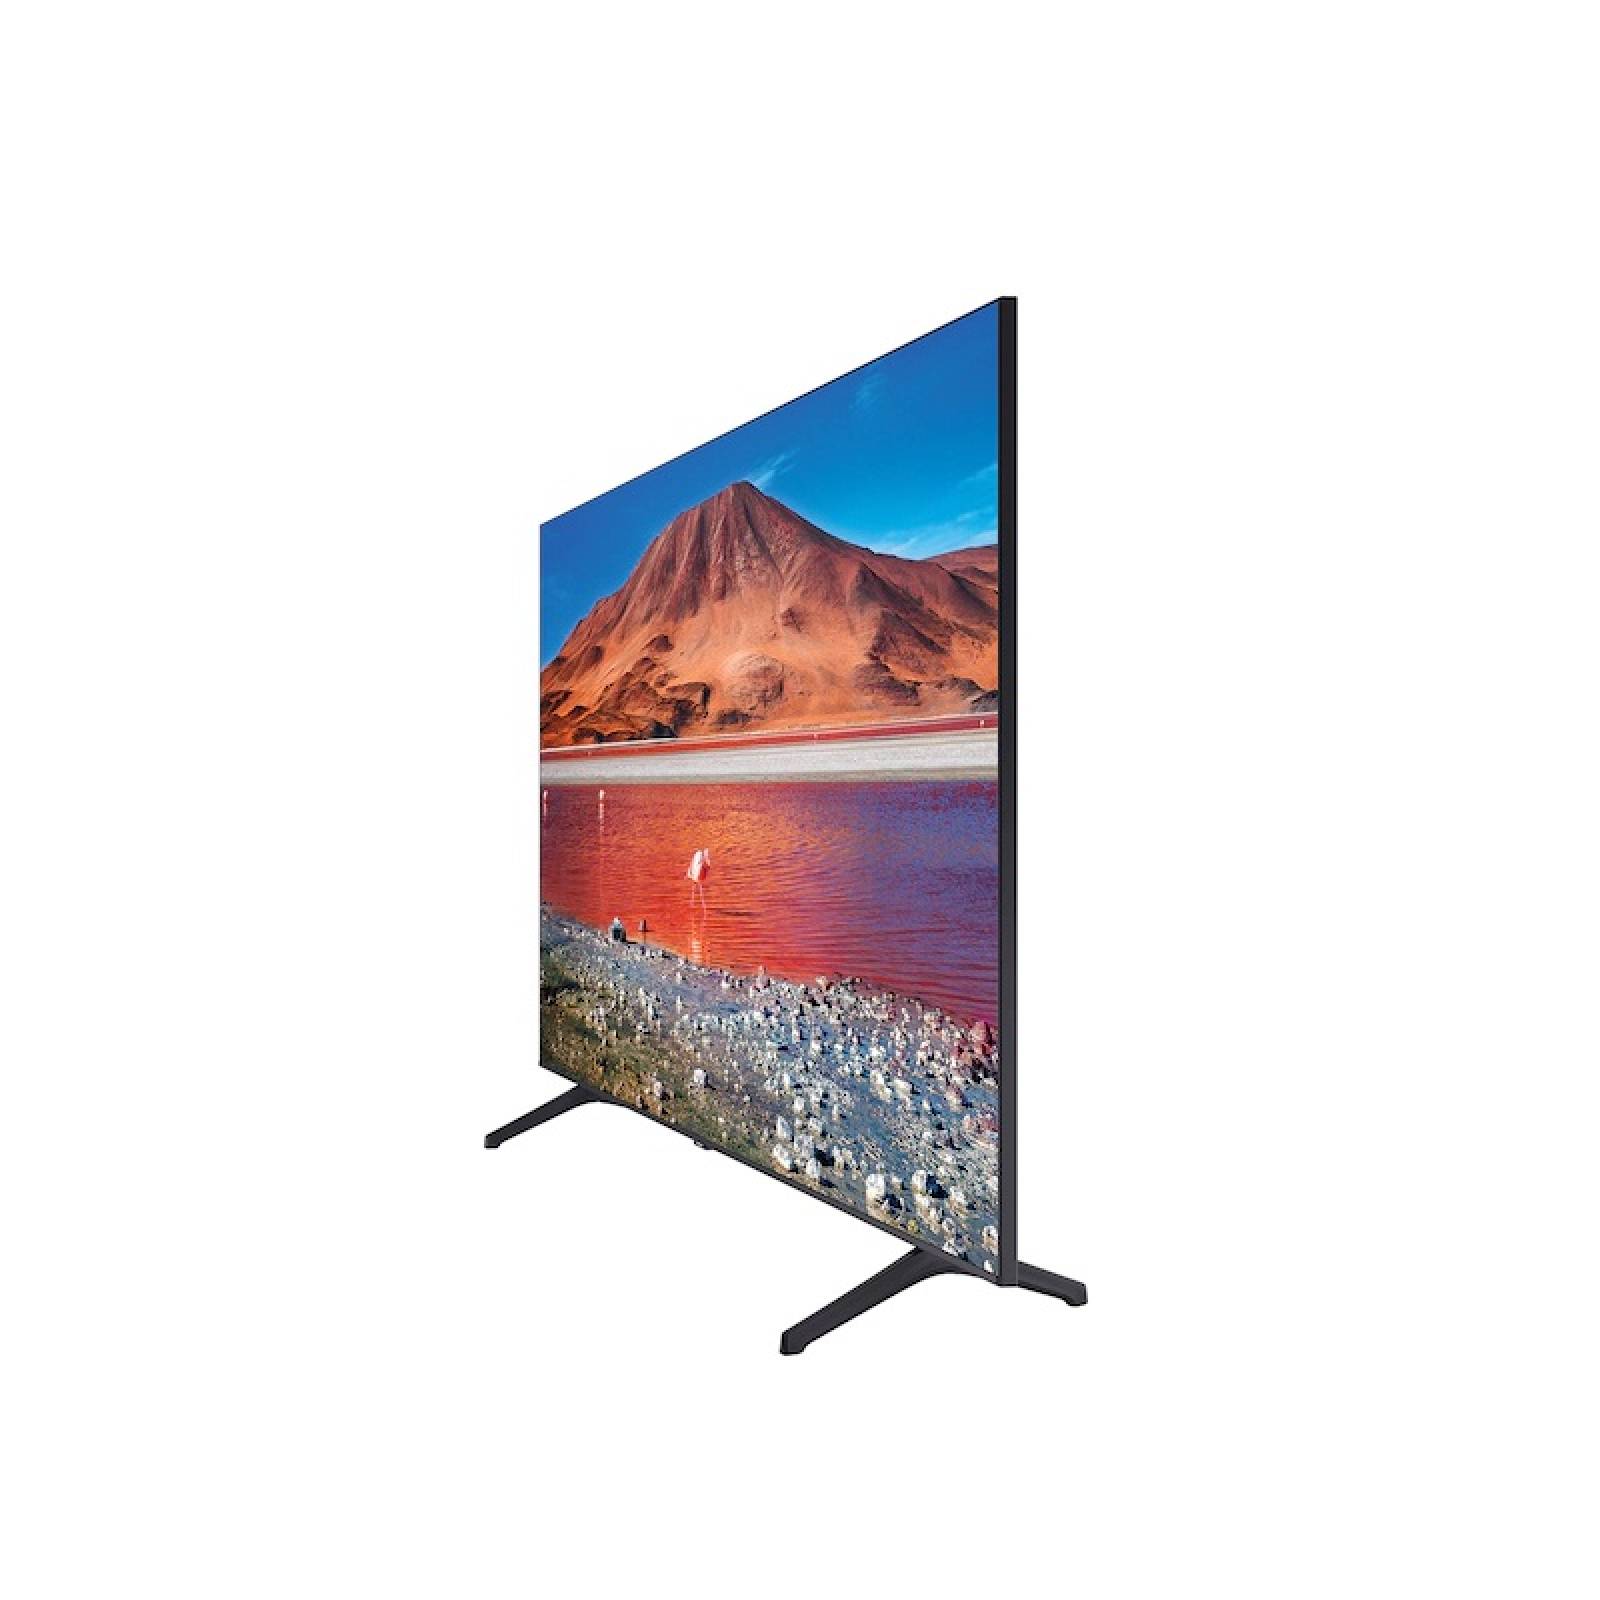 Smart TV 43 Samsung 4K HDR google alexa UN43TU700DFXZA